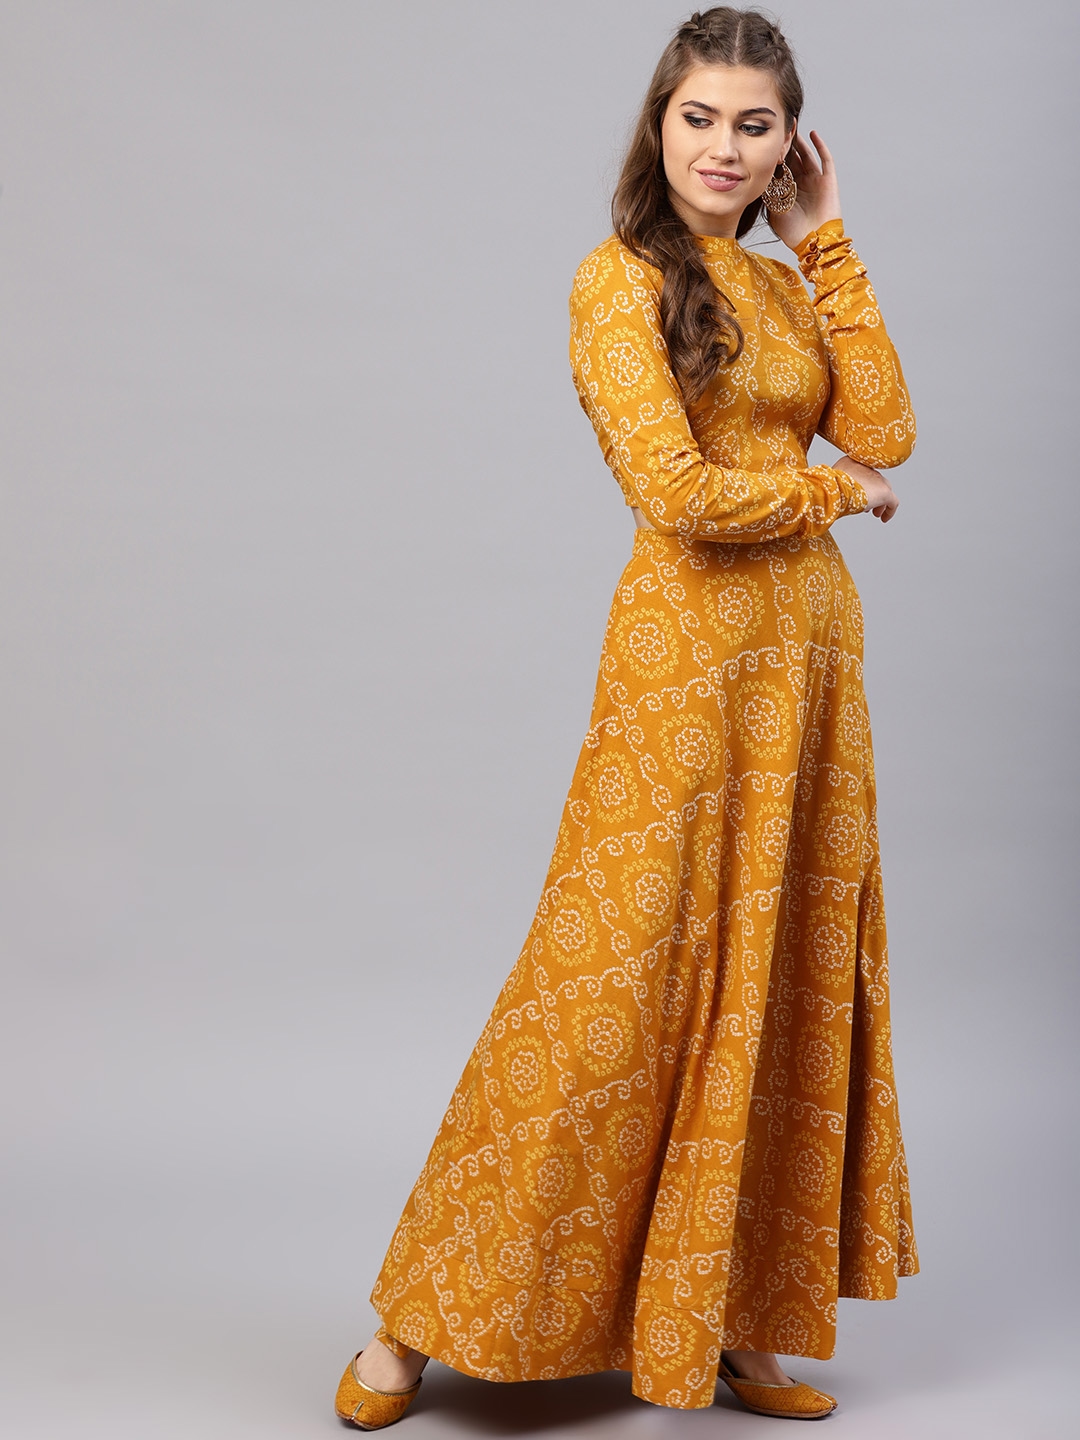 Mango and Peach Bandhej Lehenga Set with a Yellow Dupatta – NidhiTholia